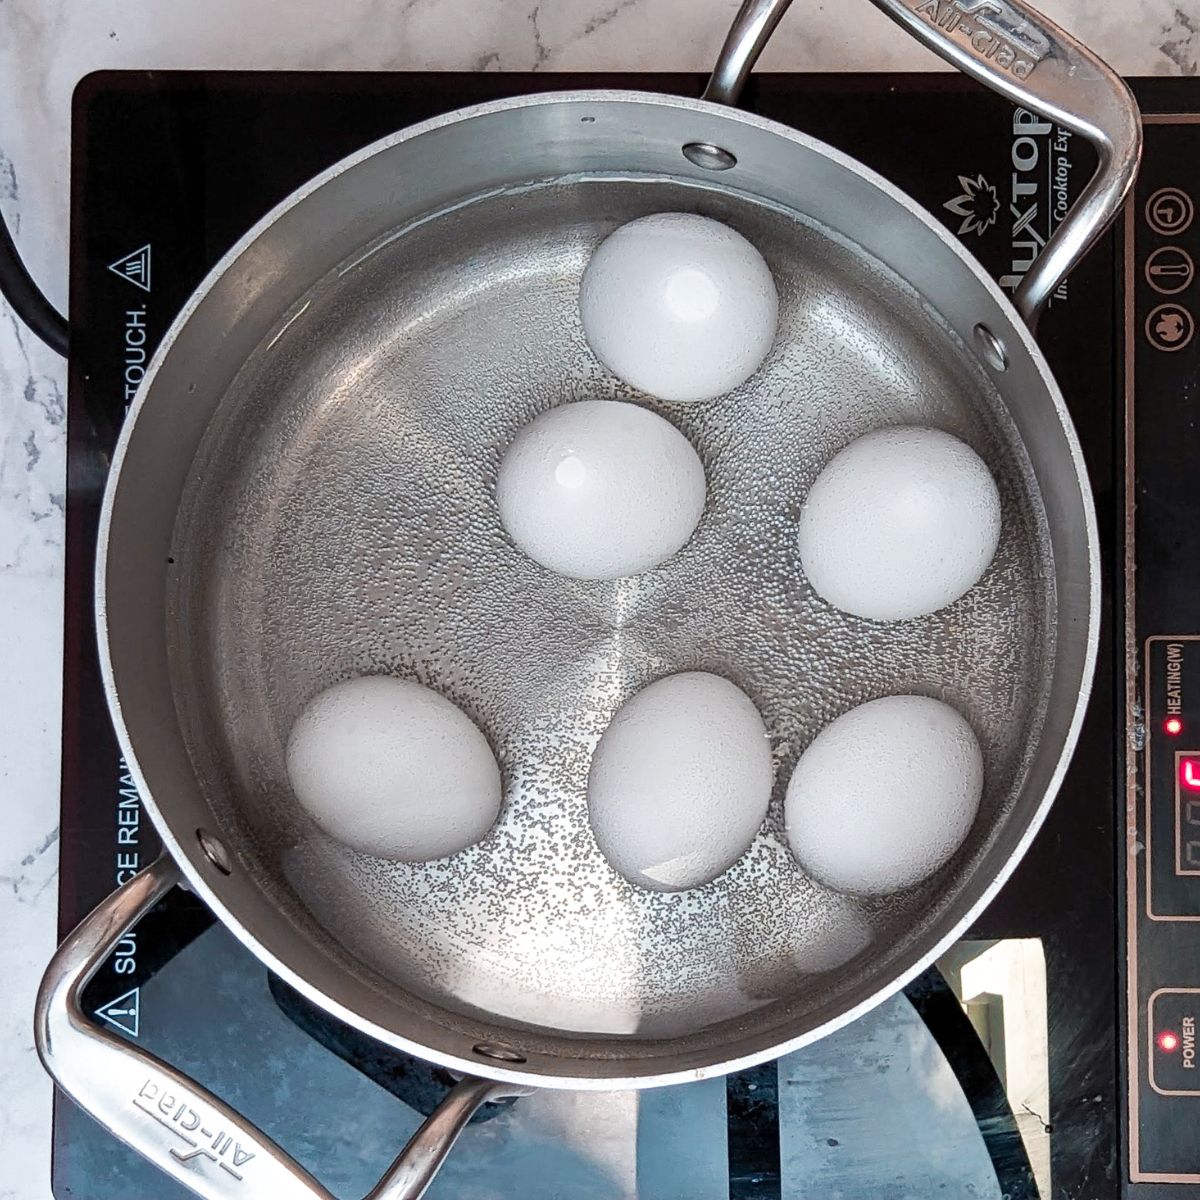 Eggs cooking in pan. 